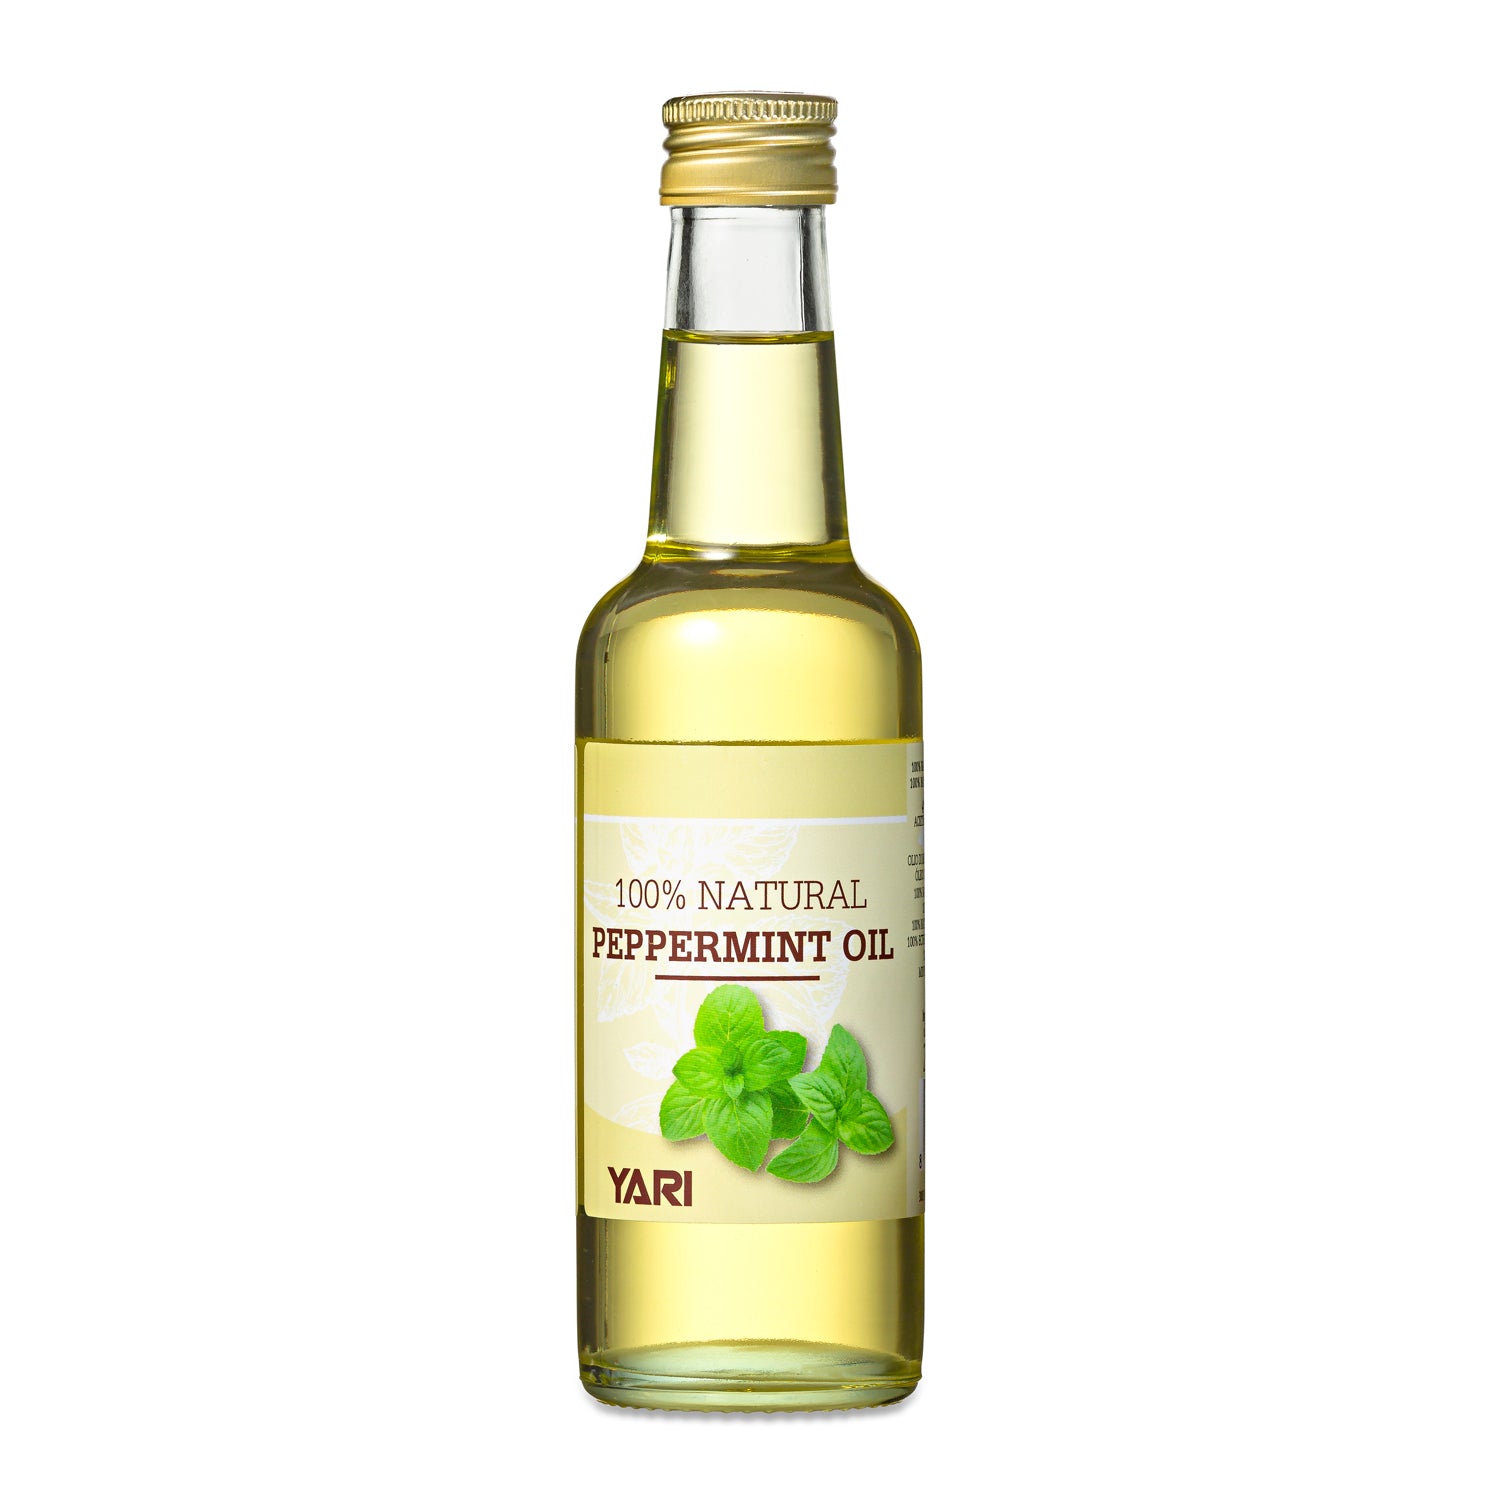 Yari - 100% Natural Peppermint Oil 250ml